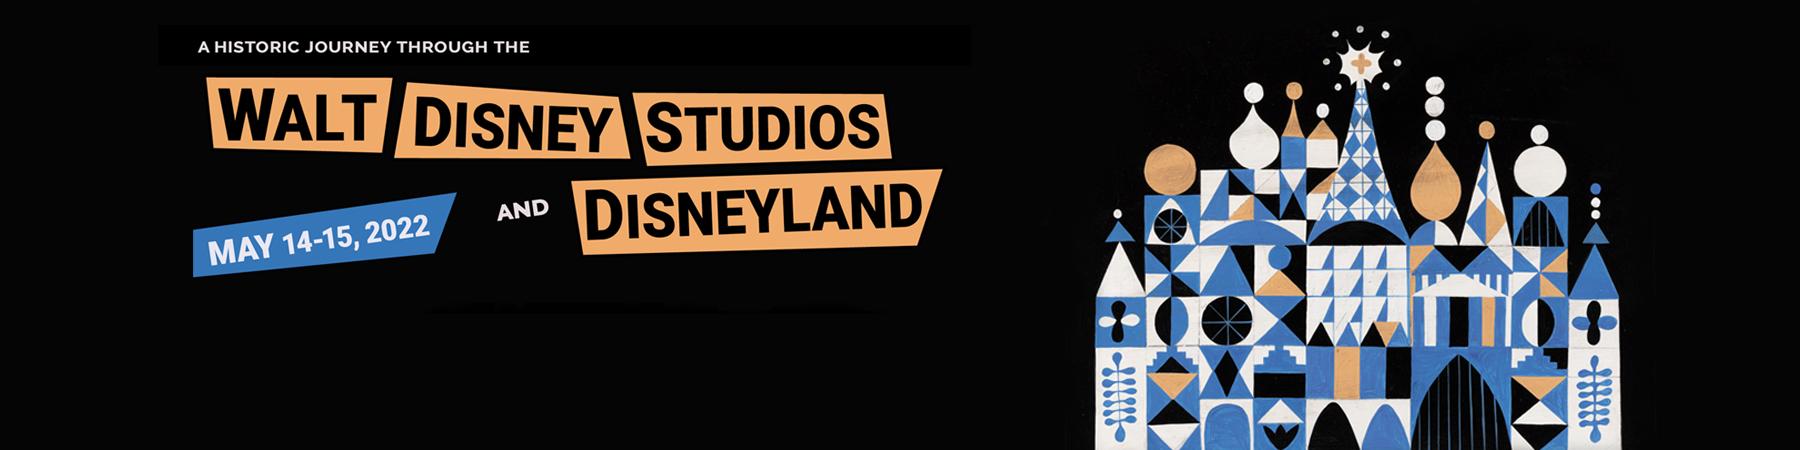 A Historic Journey through the Walt Disney Studios and Disneyland Auction & Exhibition